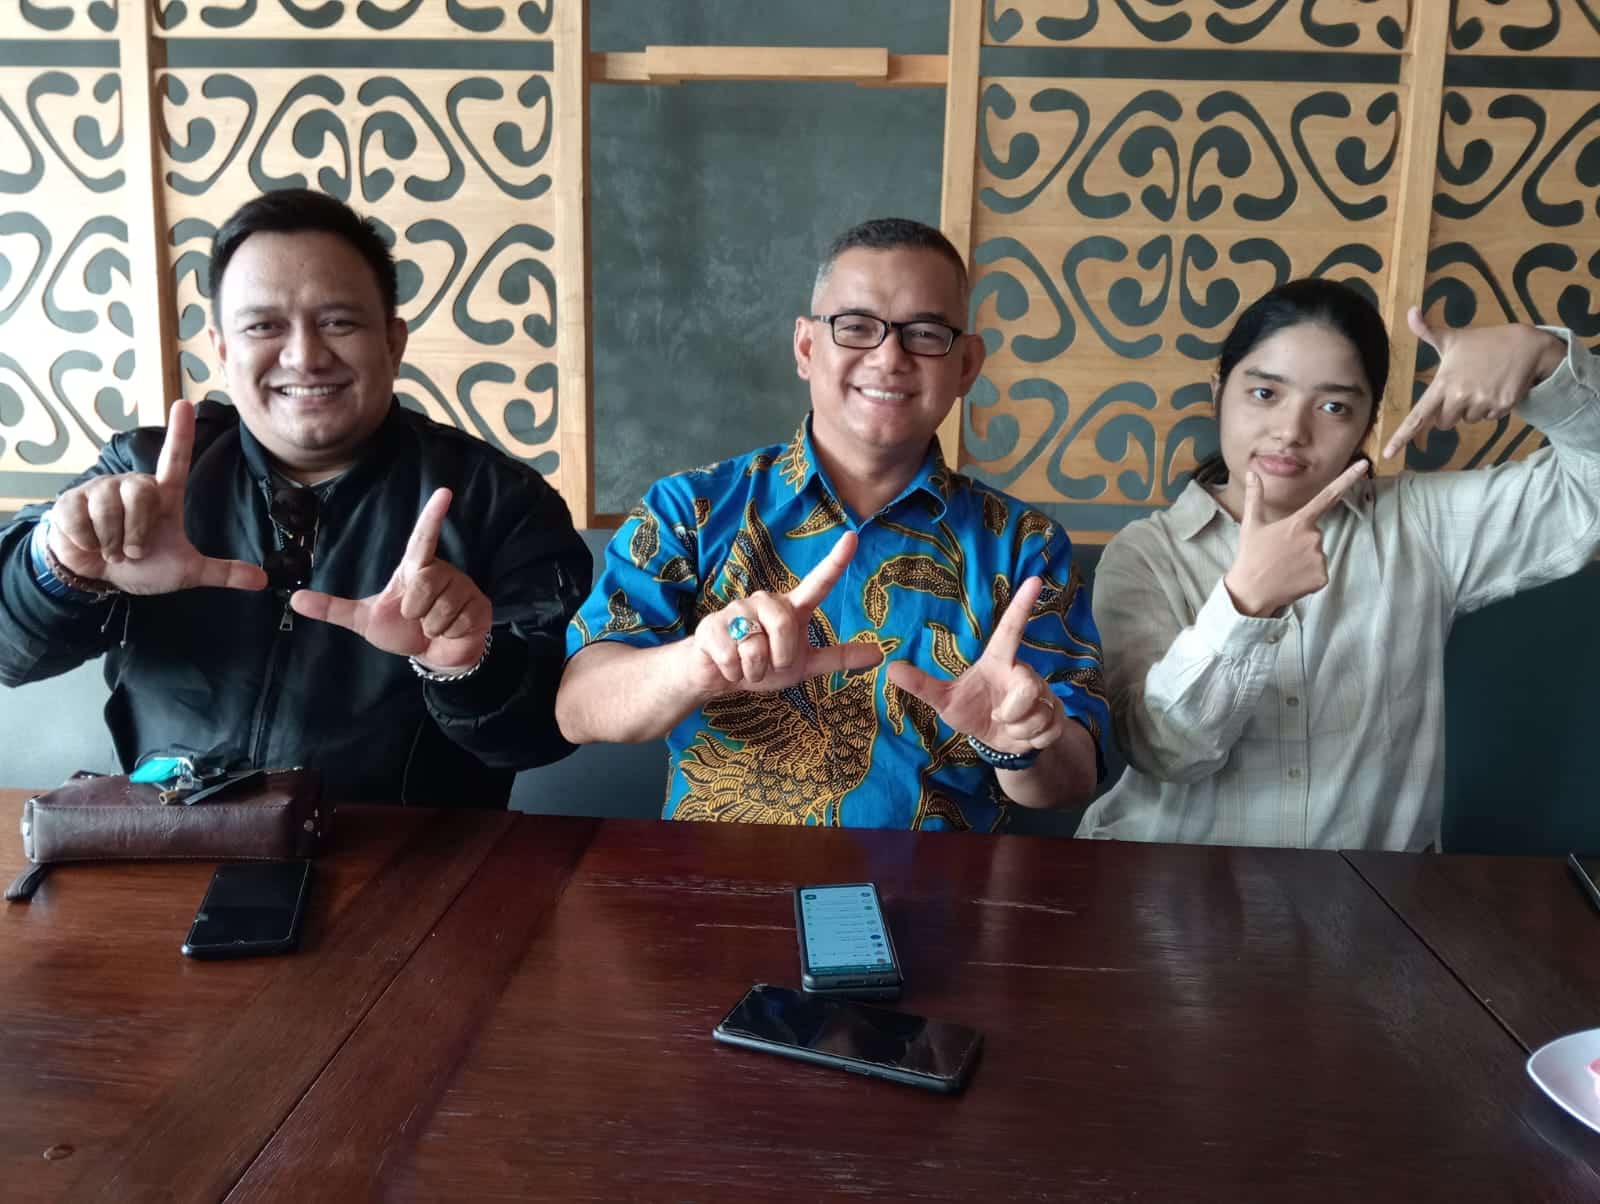 Ketua Persatuan Perusahaan Periklanan Indonesia (p3i) Kalbar, Zulfydar Zaidar Mochtar (tengah) berfoto bersama. (Foto: Jauhari)